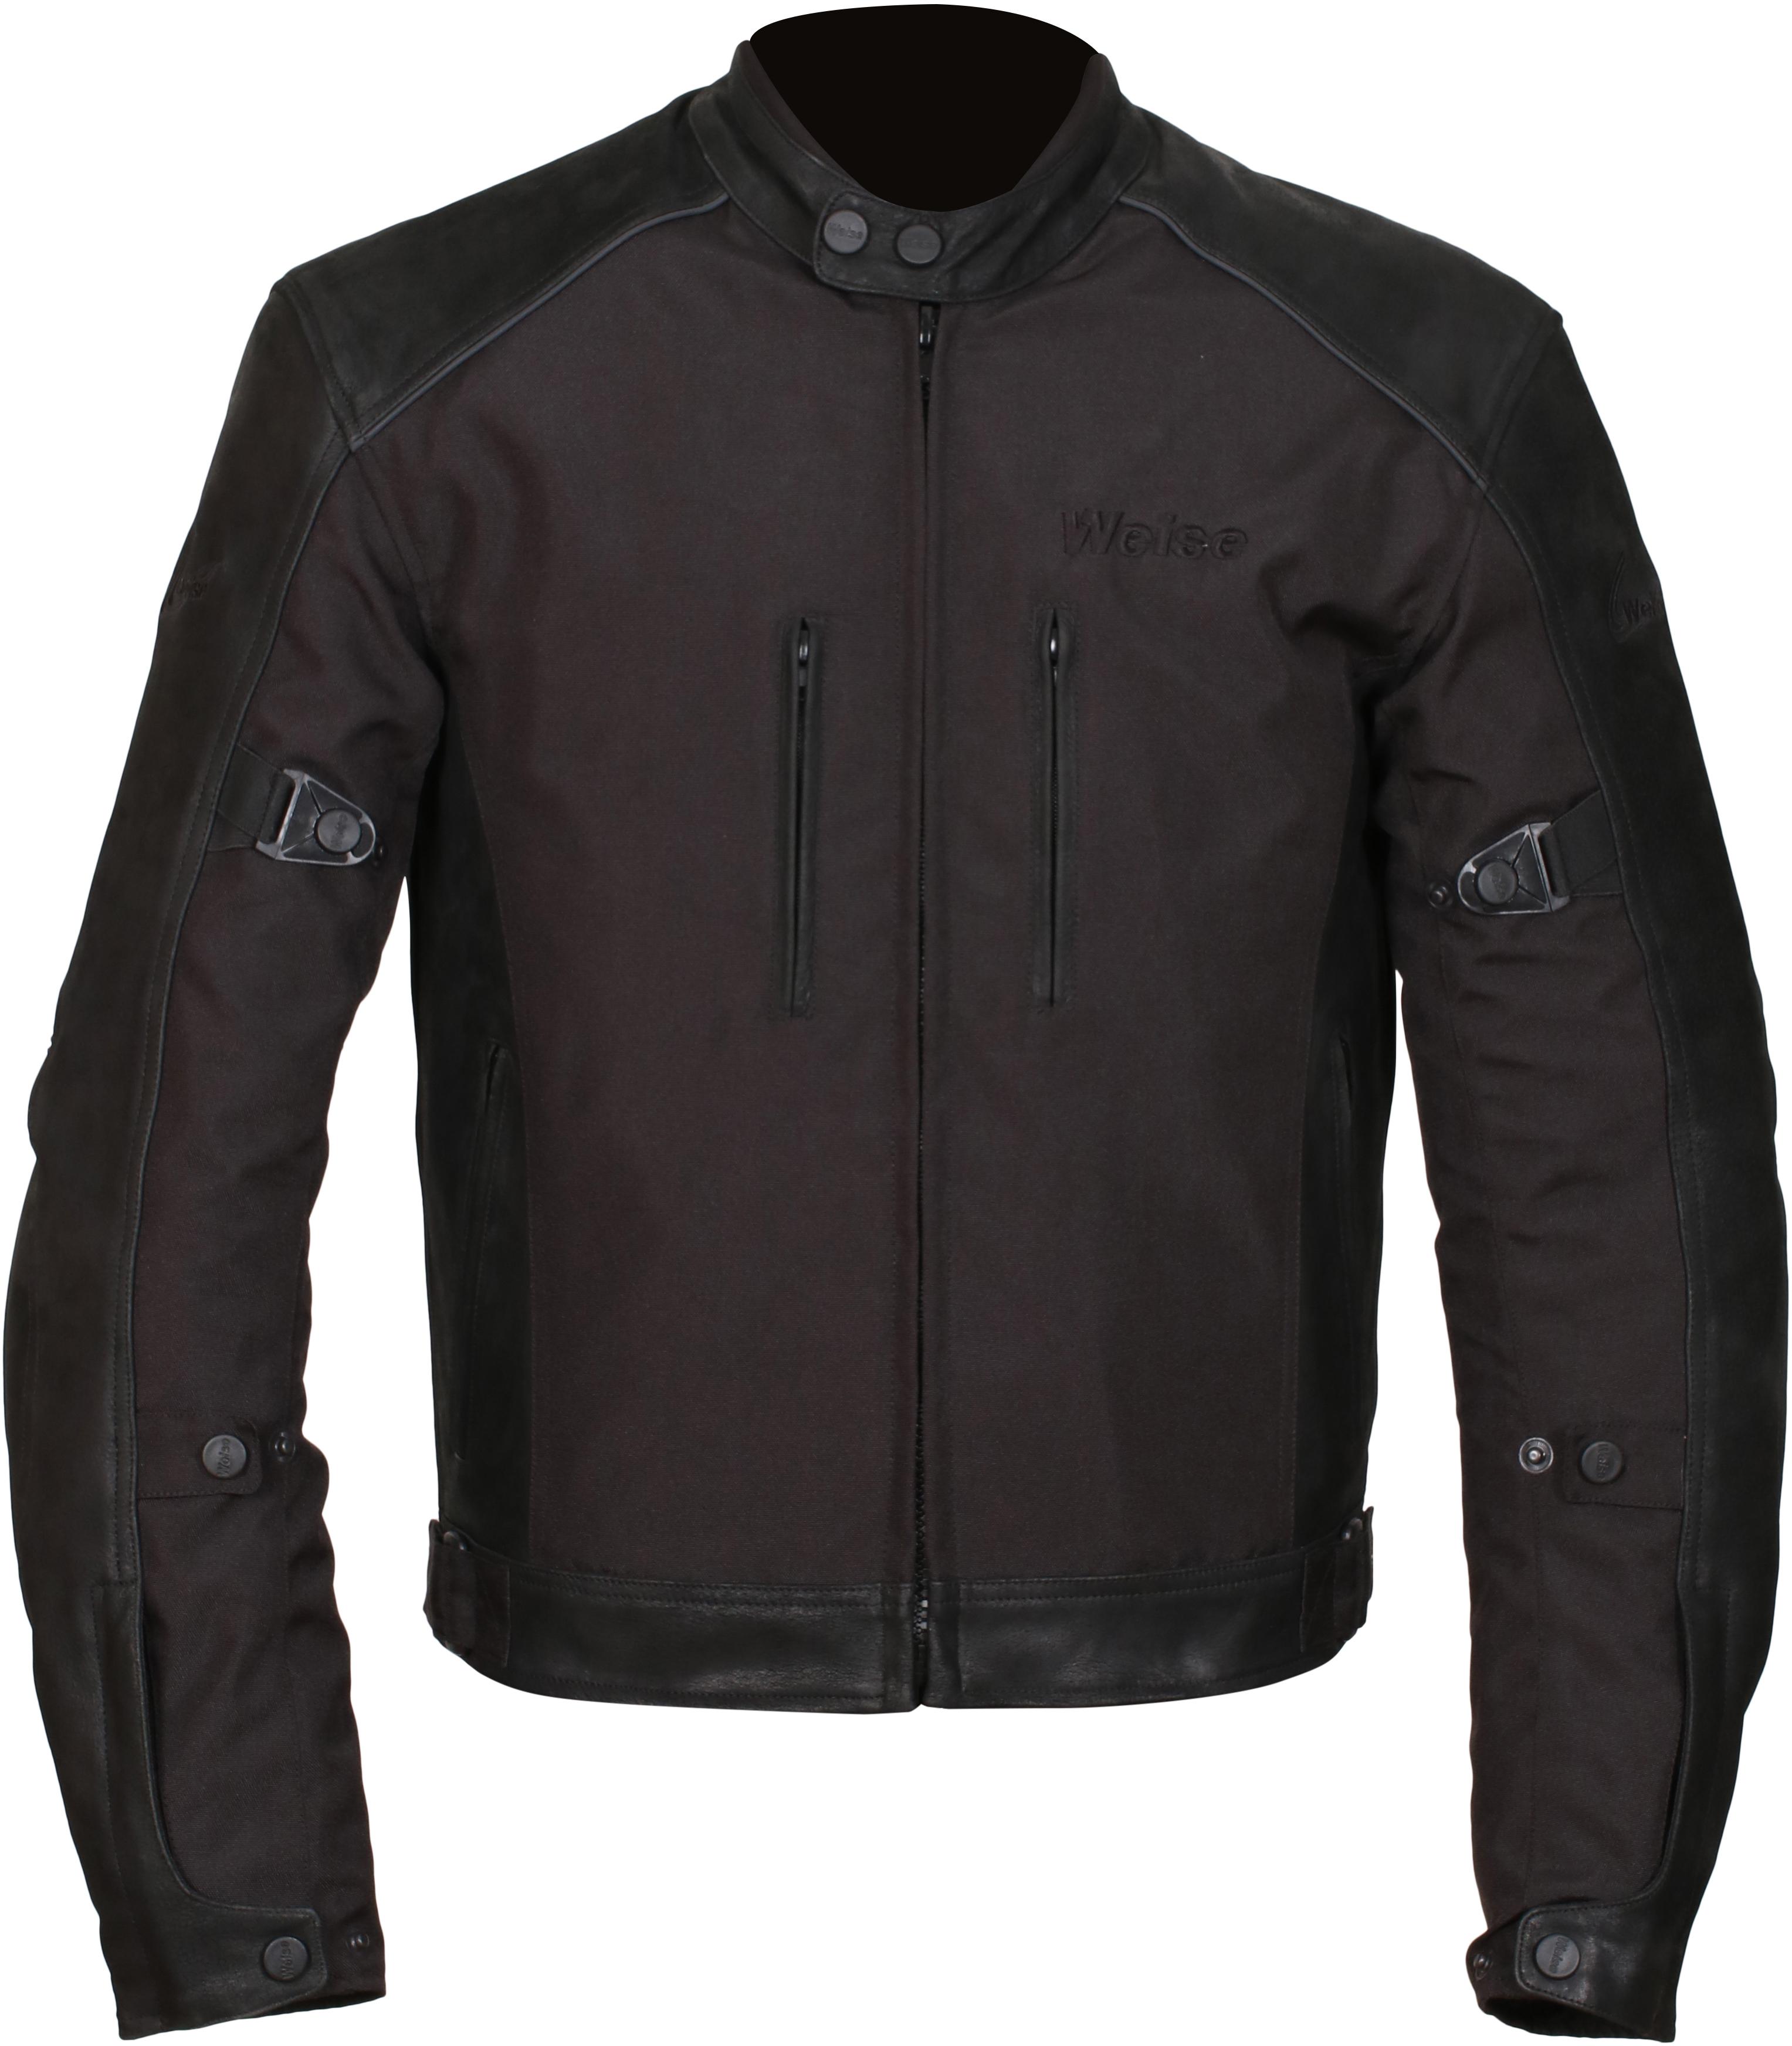 Weise Mission Motorcycle Jacket - Black, M